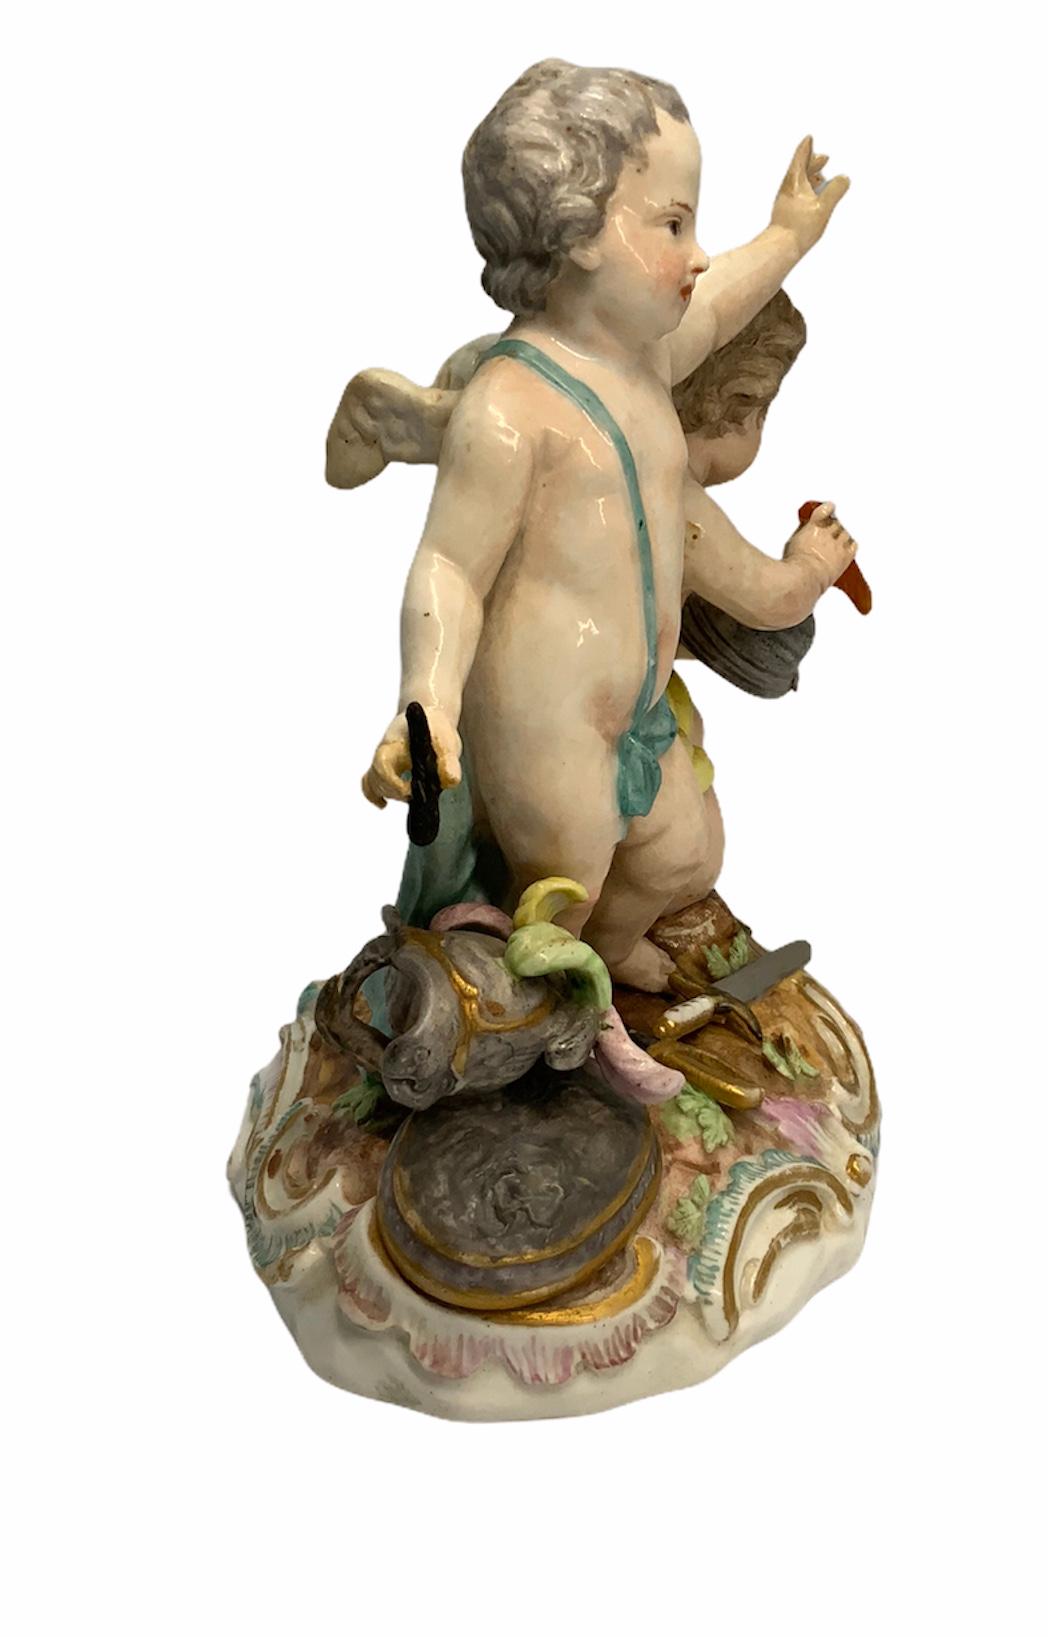 Hand-Painted Royal Porcelain or State’s Porcelain Manufactory 'KPM' Cherub’s Sculpture For Sale